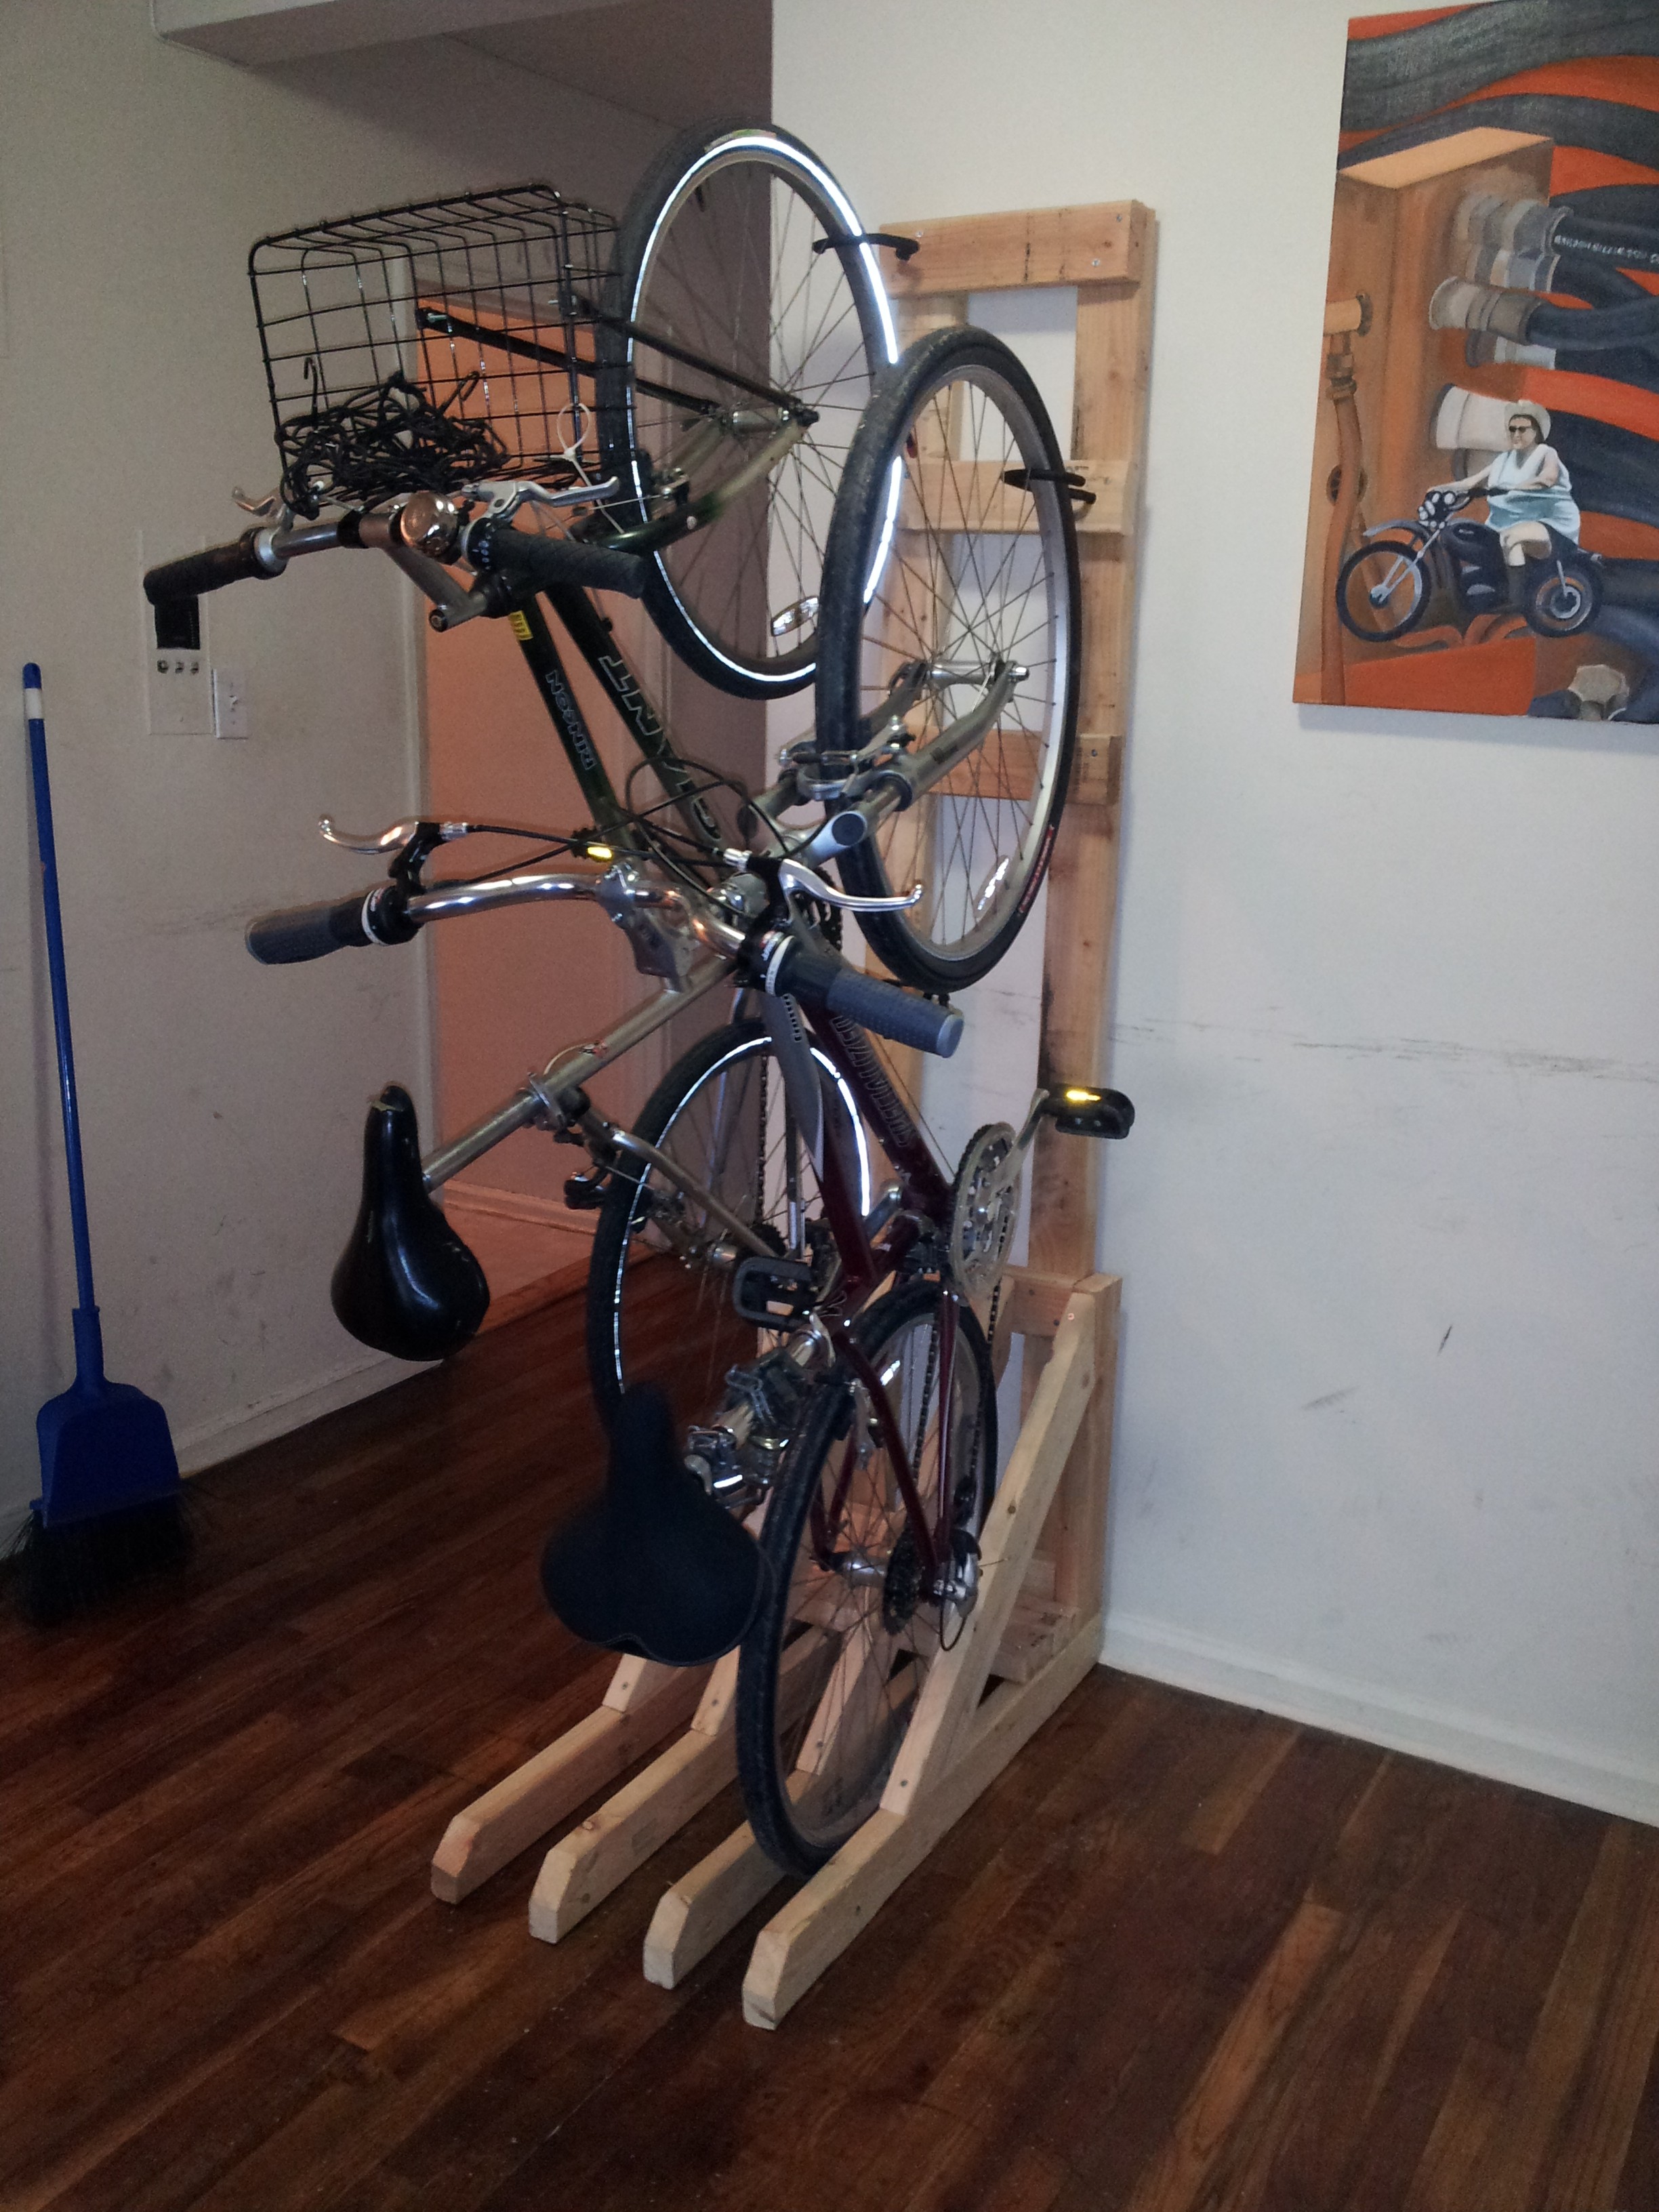 How to make a homemade bike rack